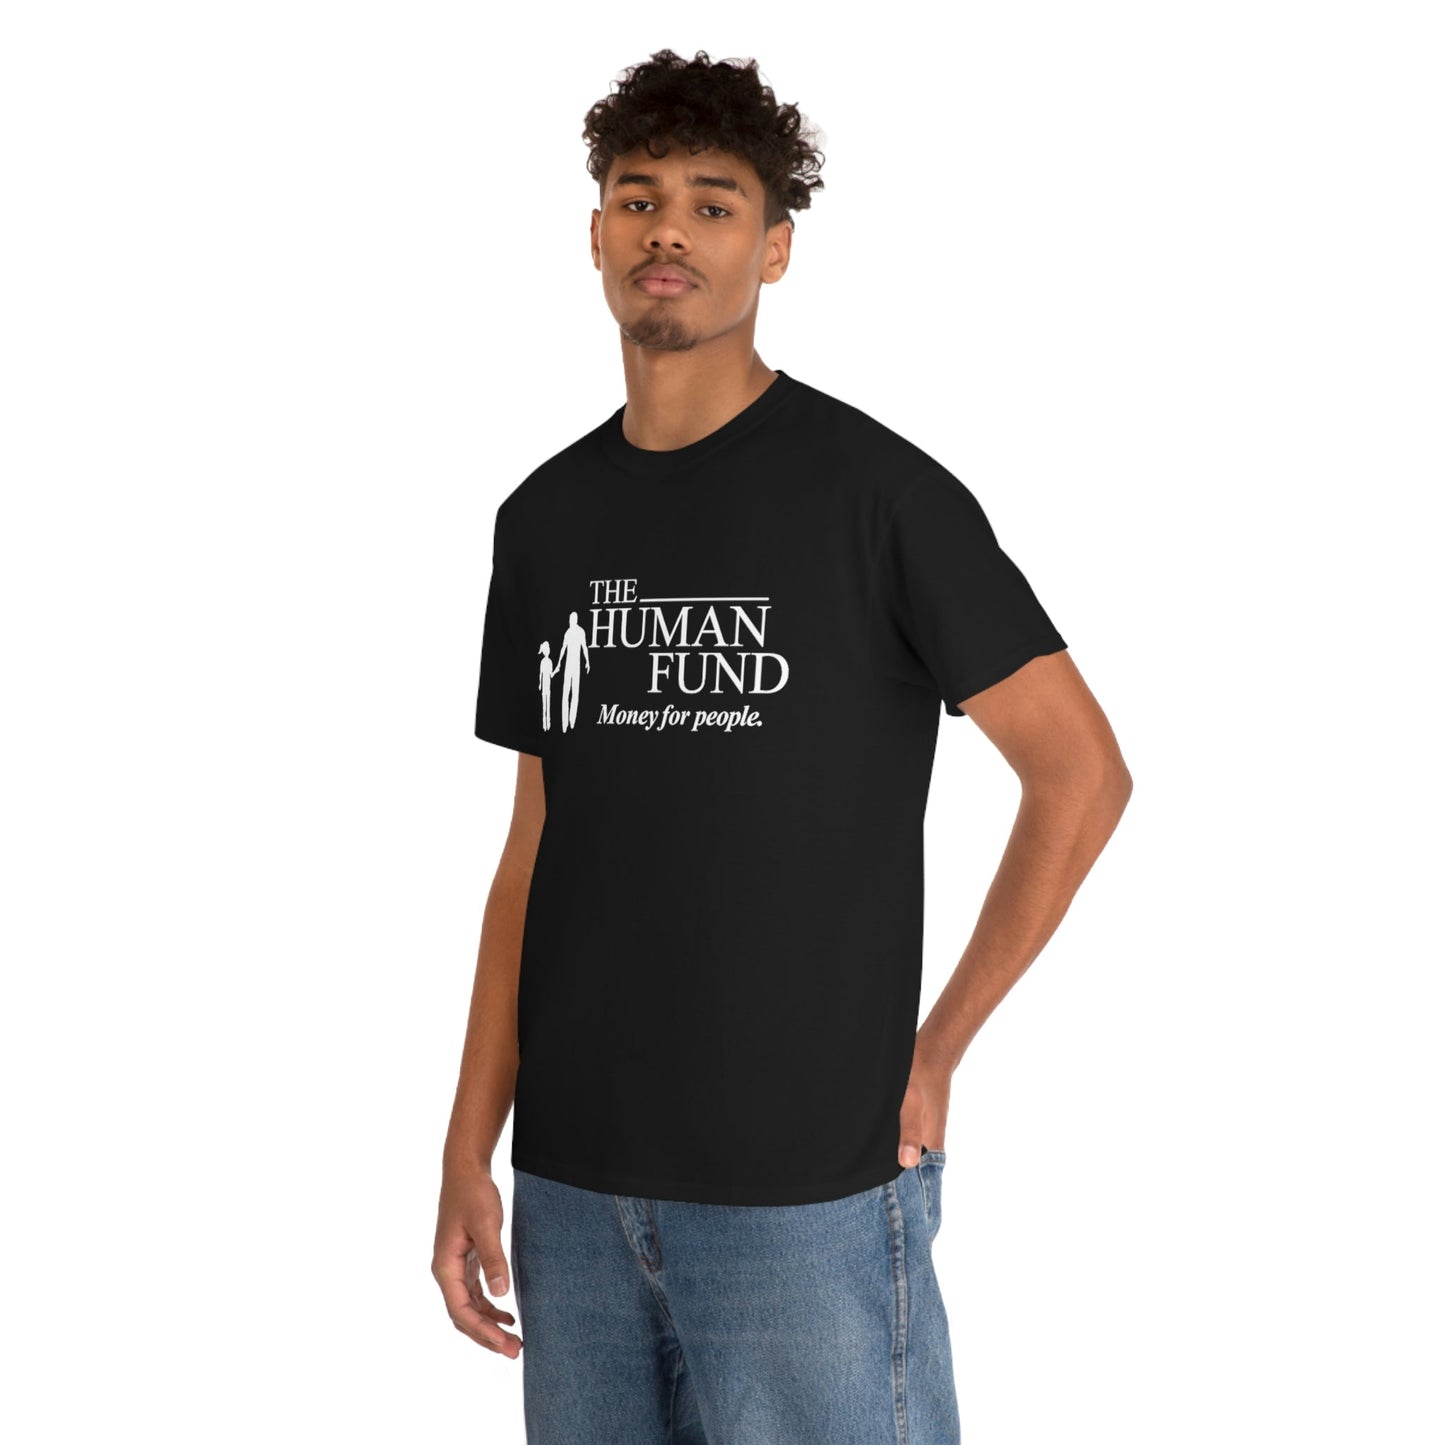 The Human Fund T-shirt Funny Seinfeld Tee - RetroTeeShop